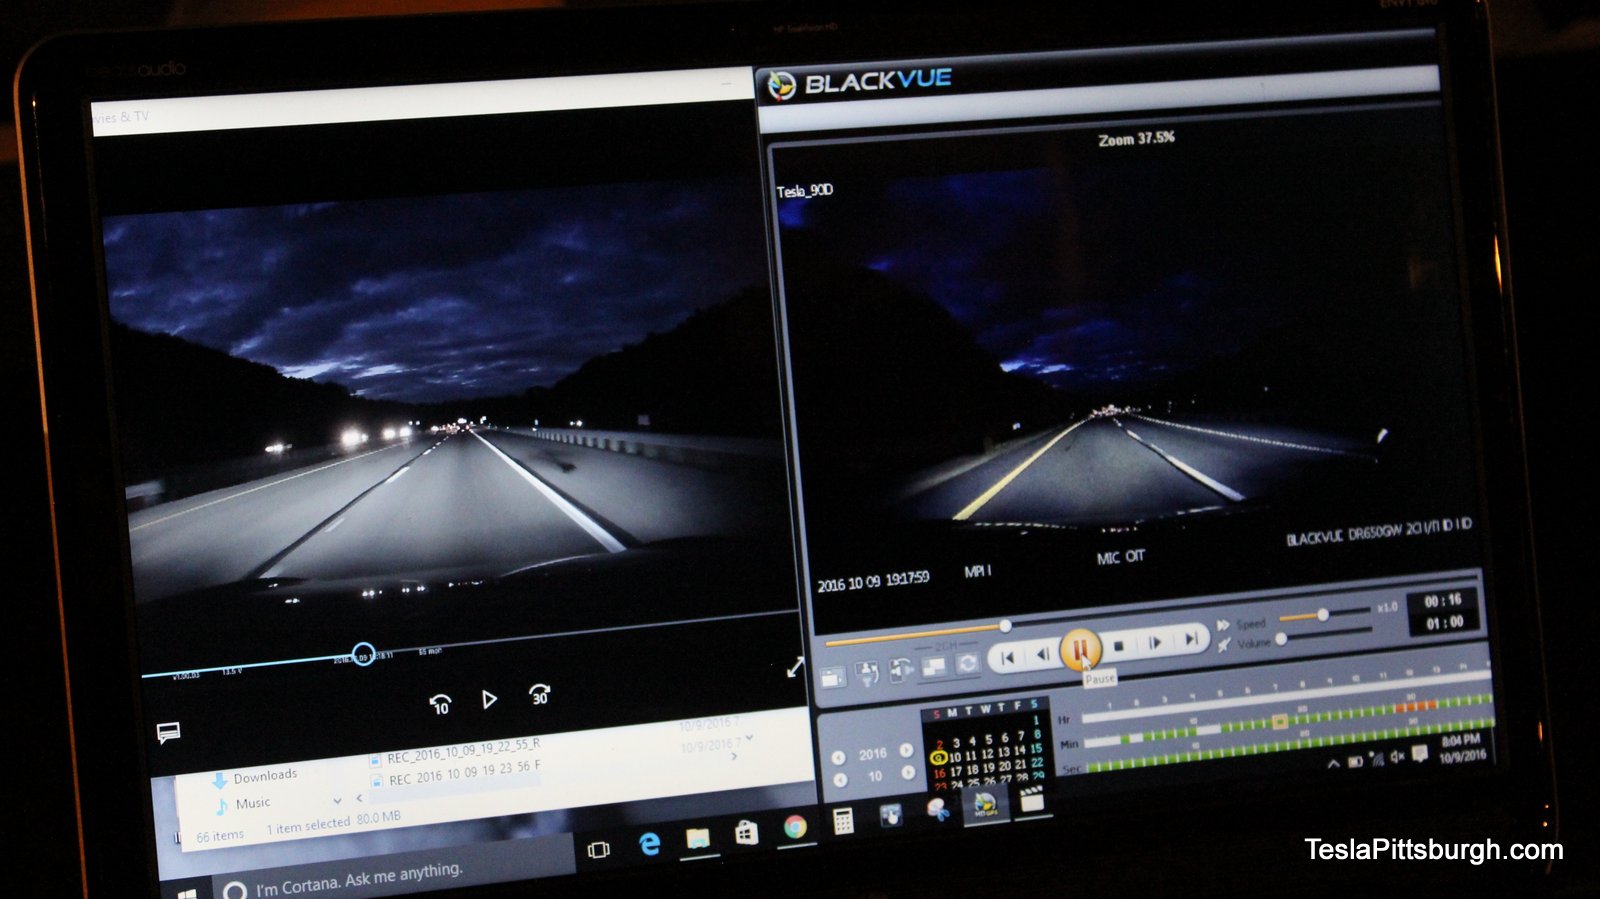 tesla-pittsburgh-dashcam-review-thinkware-f770-camera-laptop-night-comparison